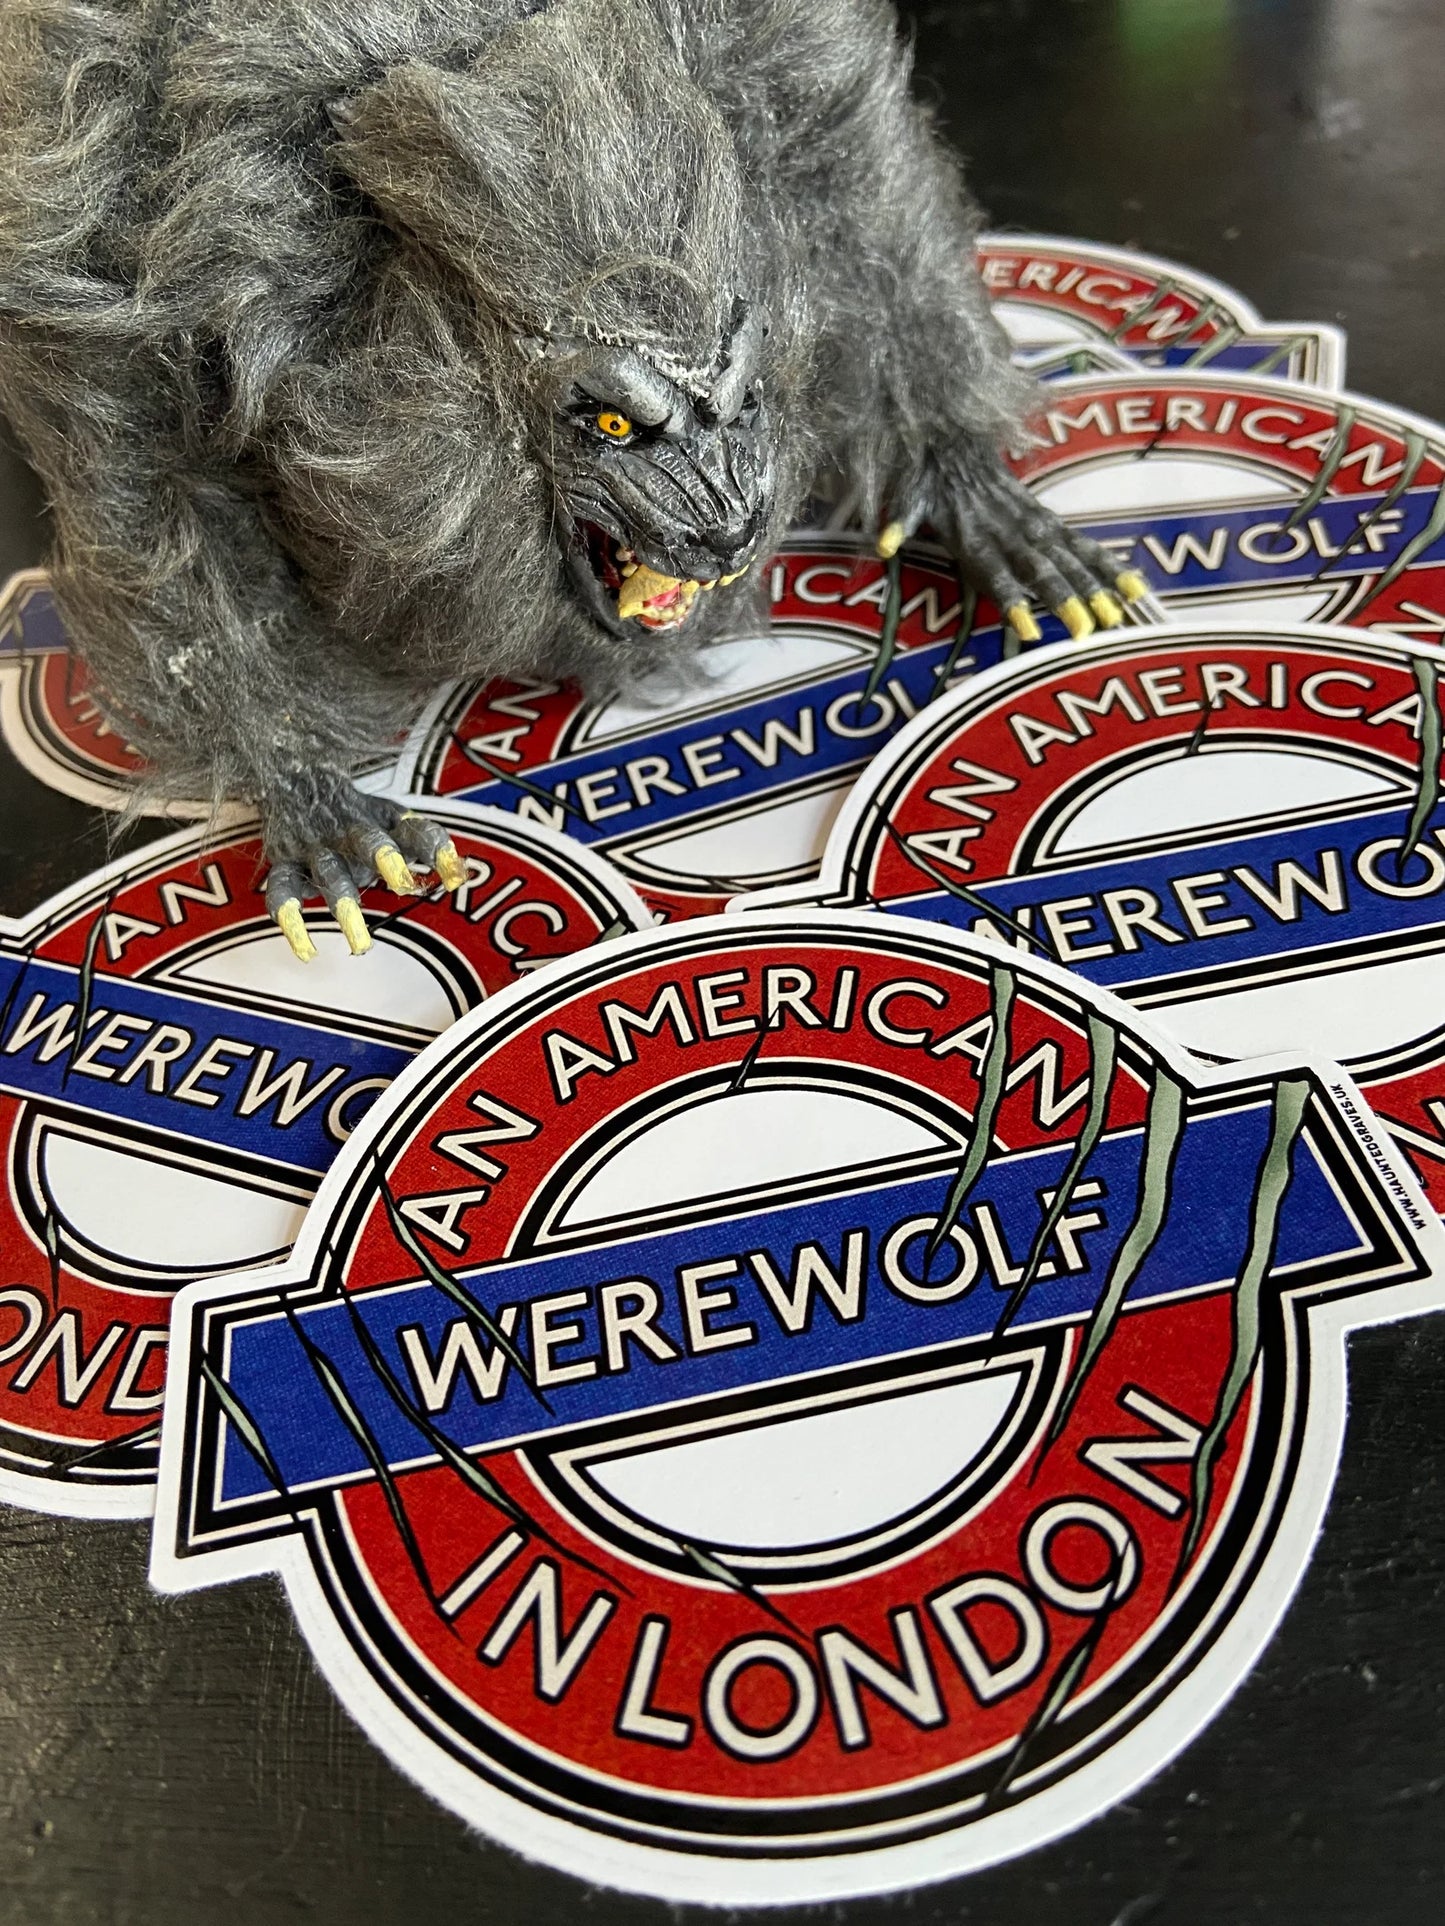 An American Werewolf in London inspired HORROR MOVIE sticker